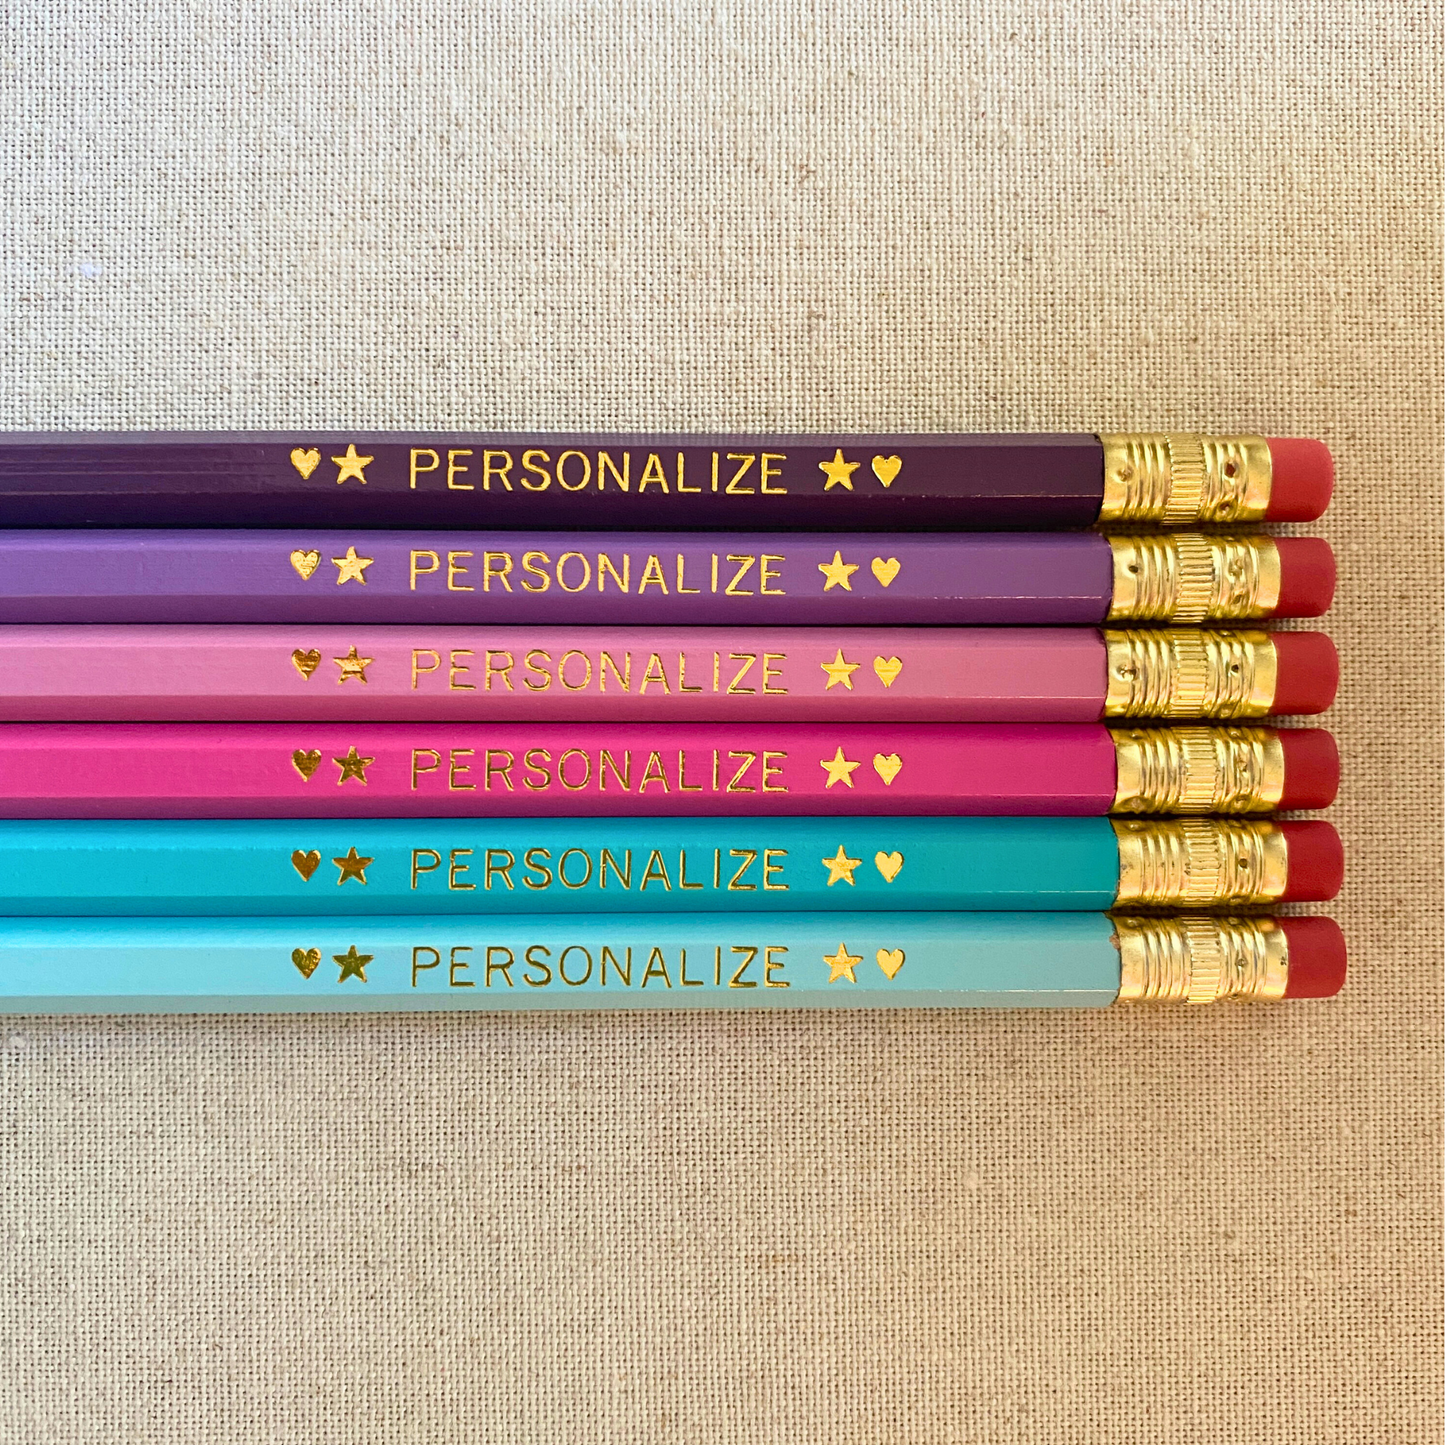 6 Personalized Pencil Set LAVENDER BLISS